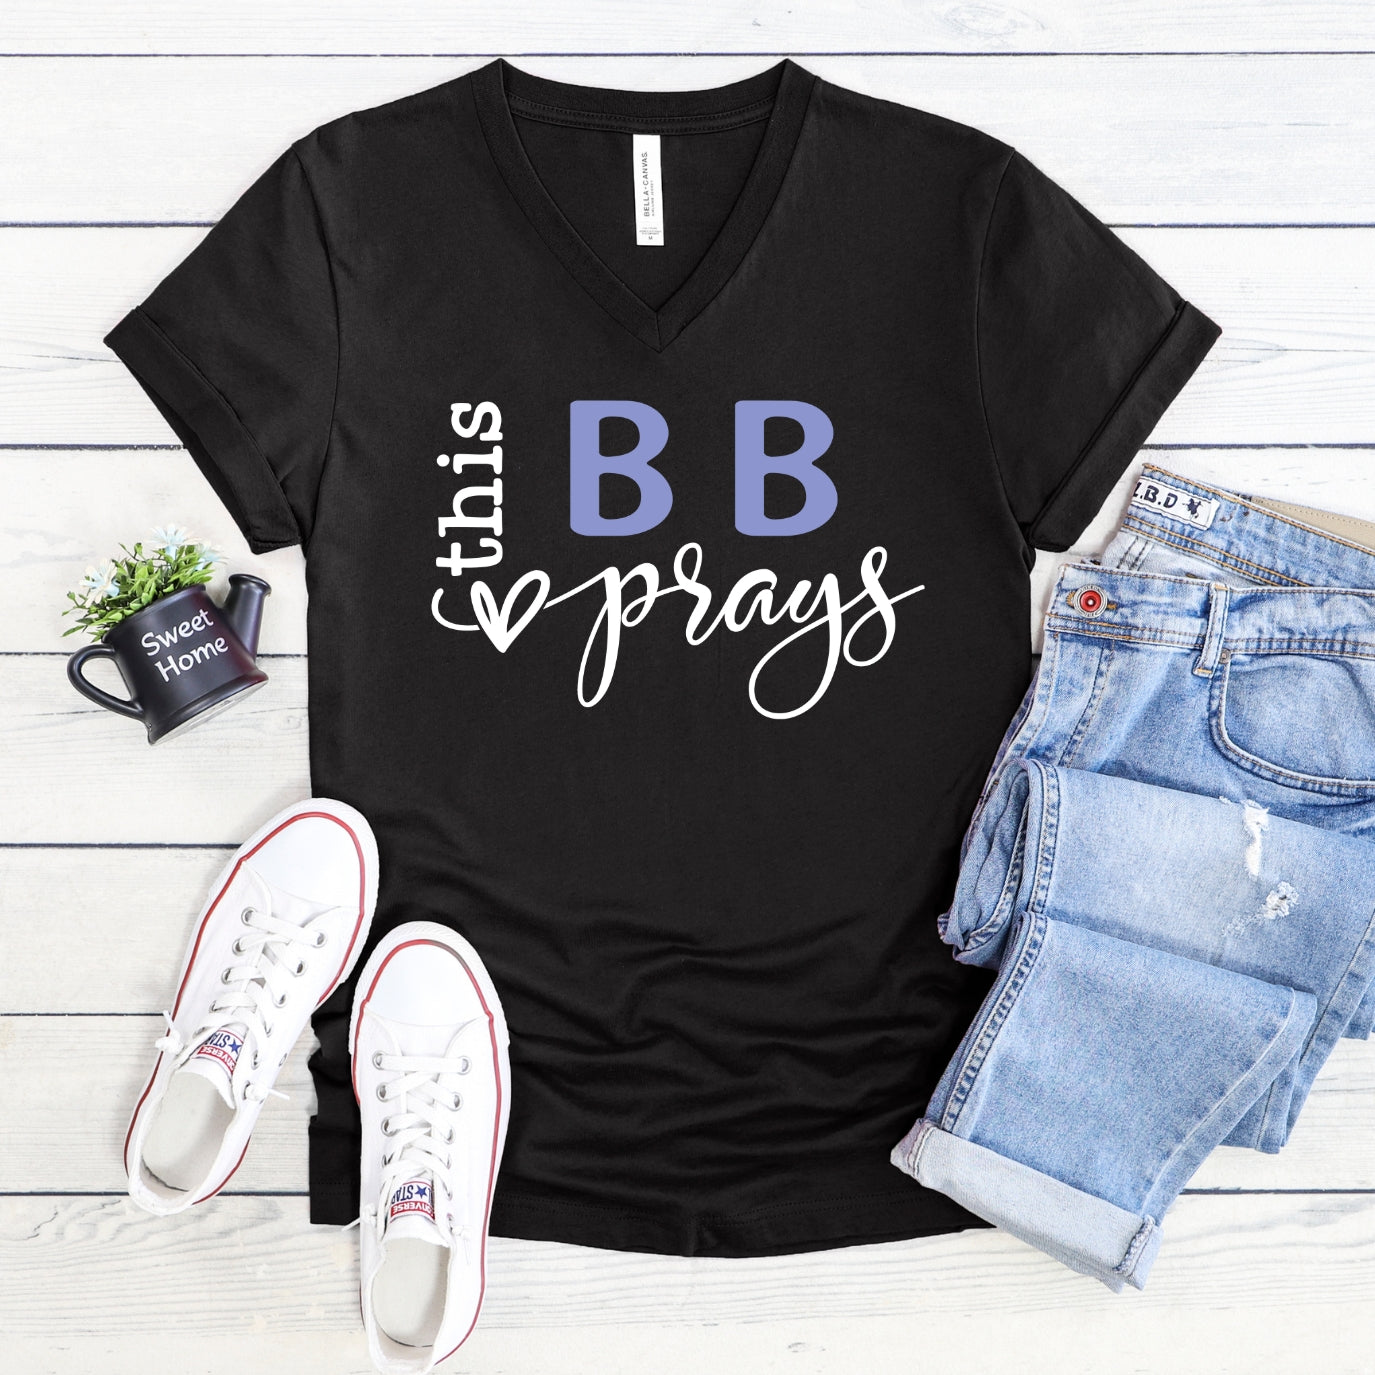 This BB Prays Women's V-Neck Shirt